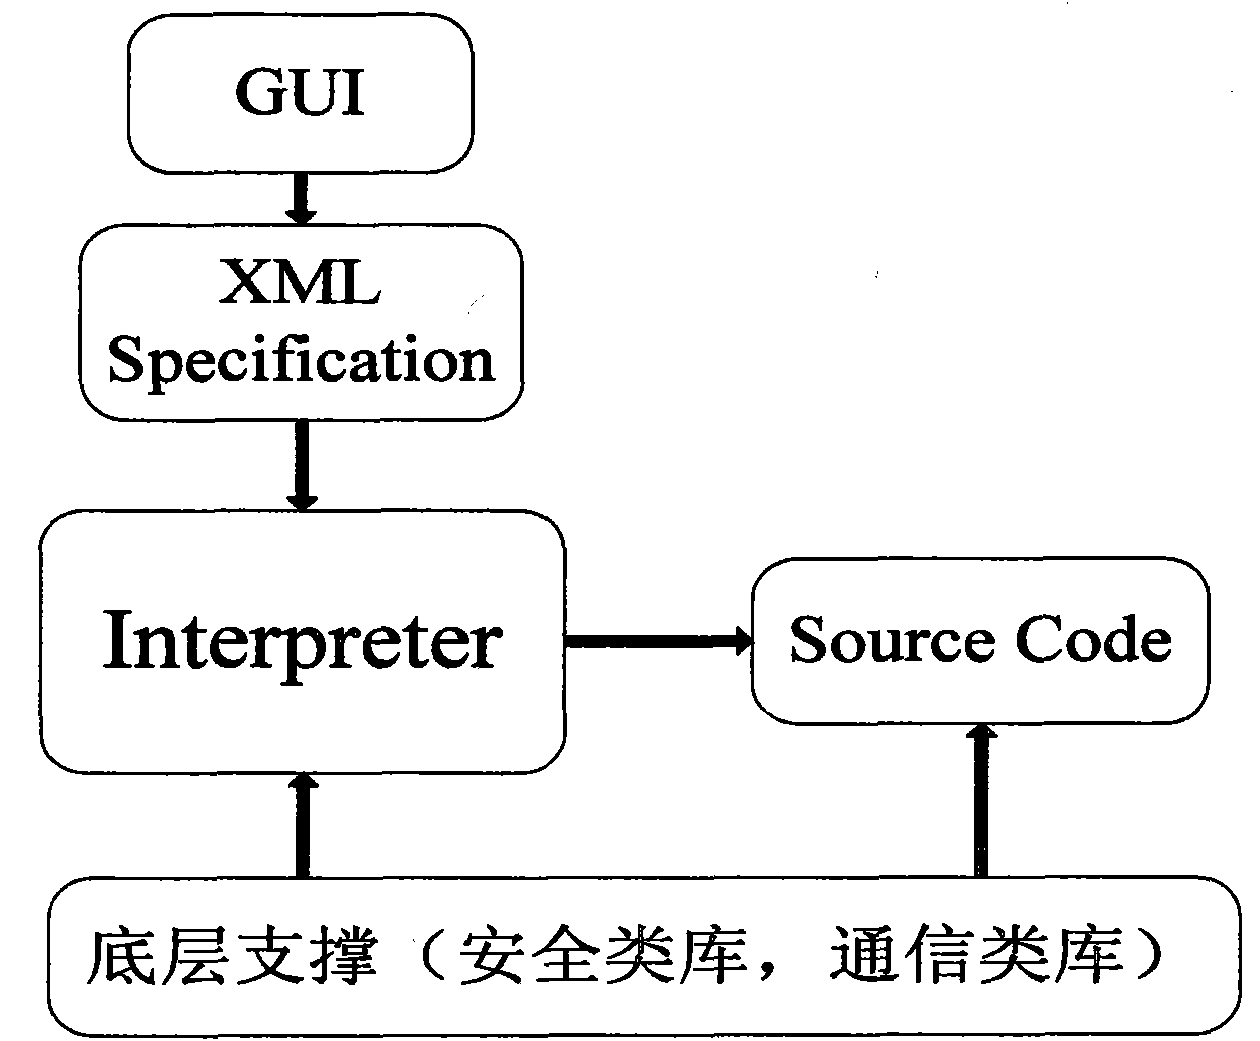 Automatic secure protocol code implementation system based on extensive markup language (XML) description